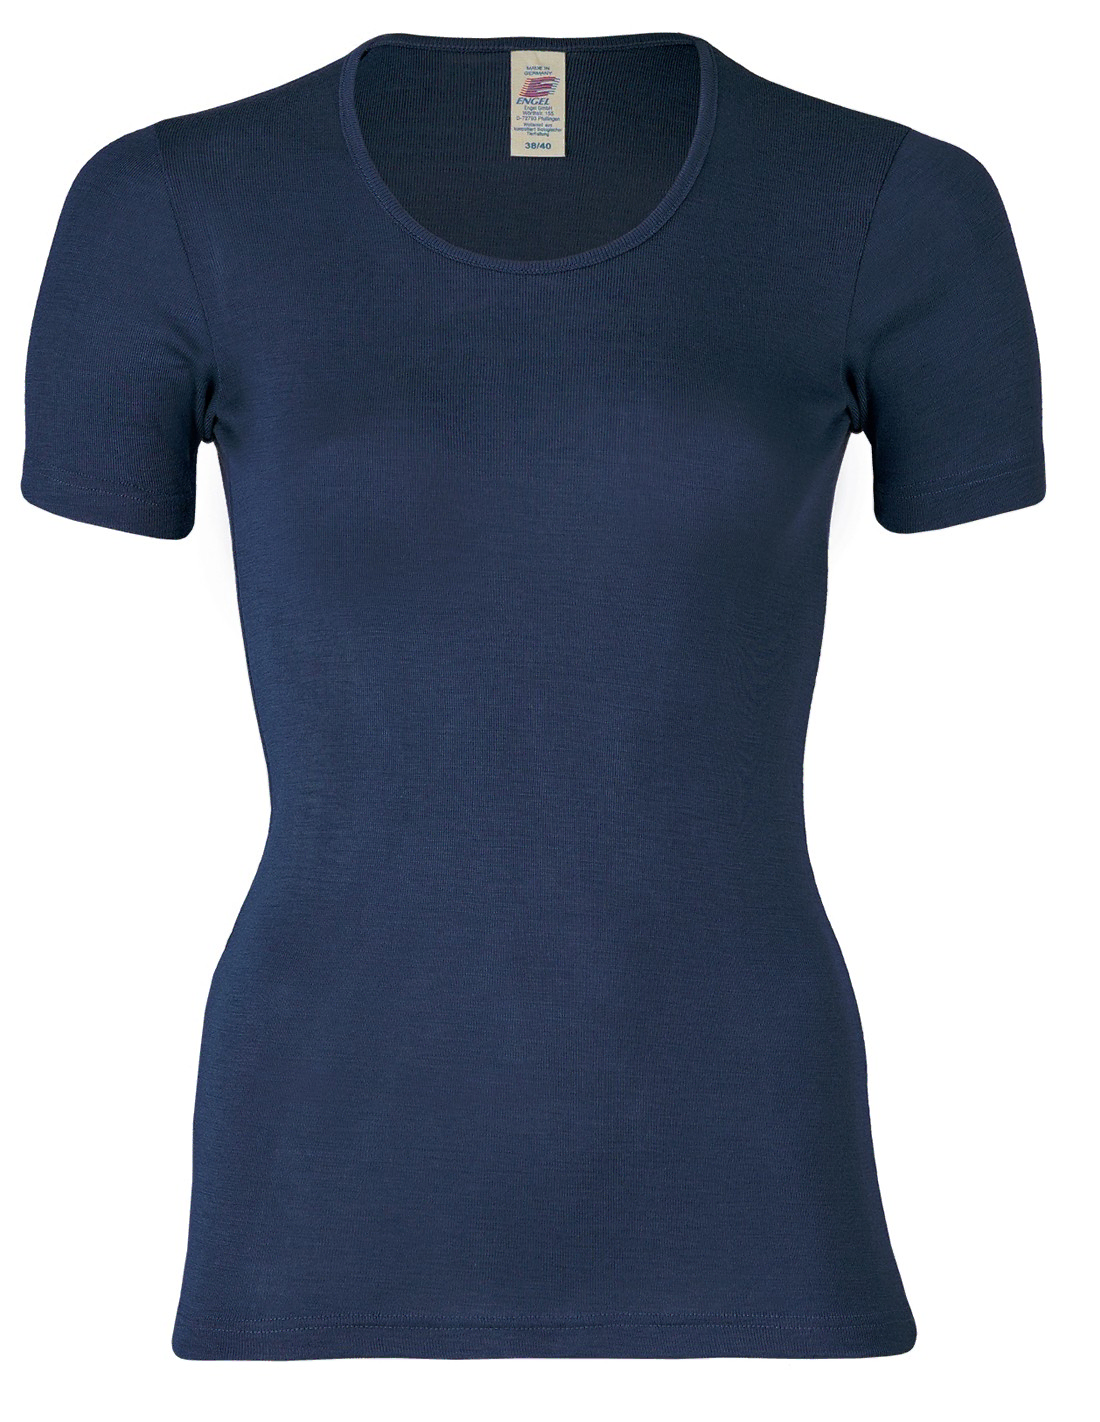 Image of Dames T-Shirt Zijde Wol Engel Natur, Kleur Navy blauw, Maat 46/48 - Extra Large